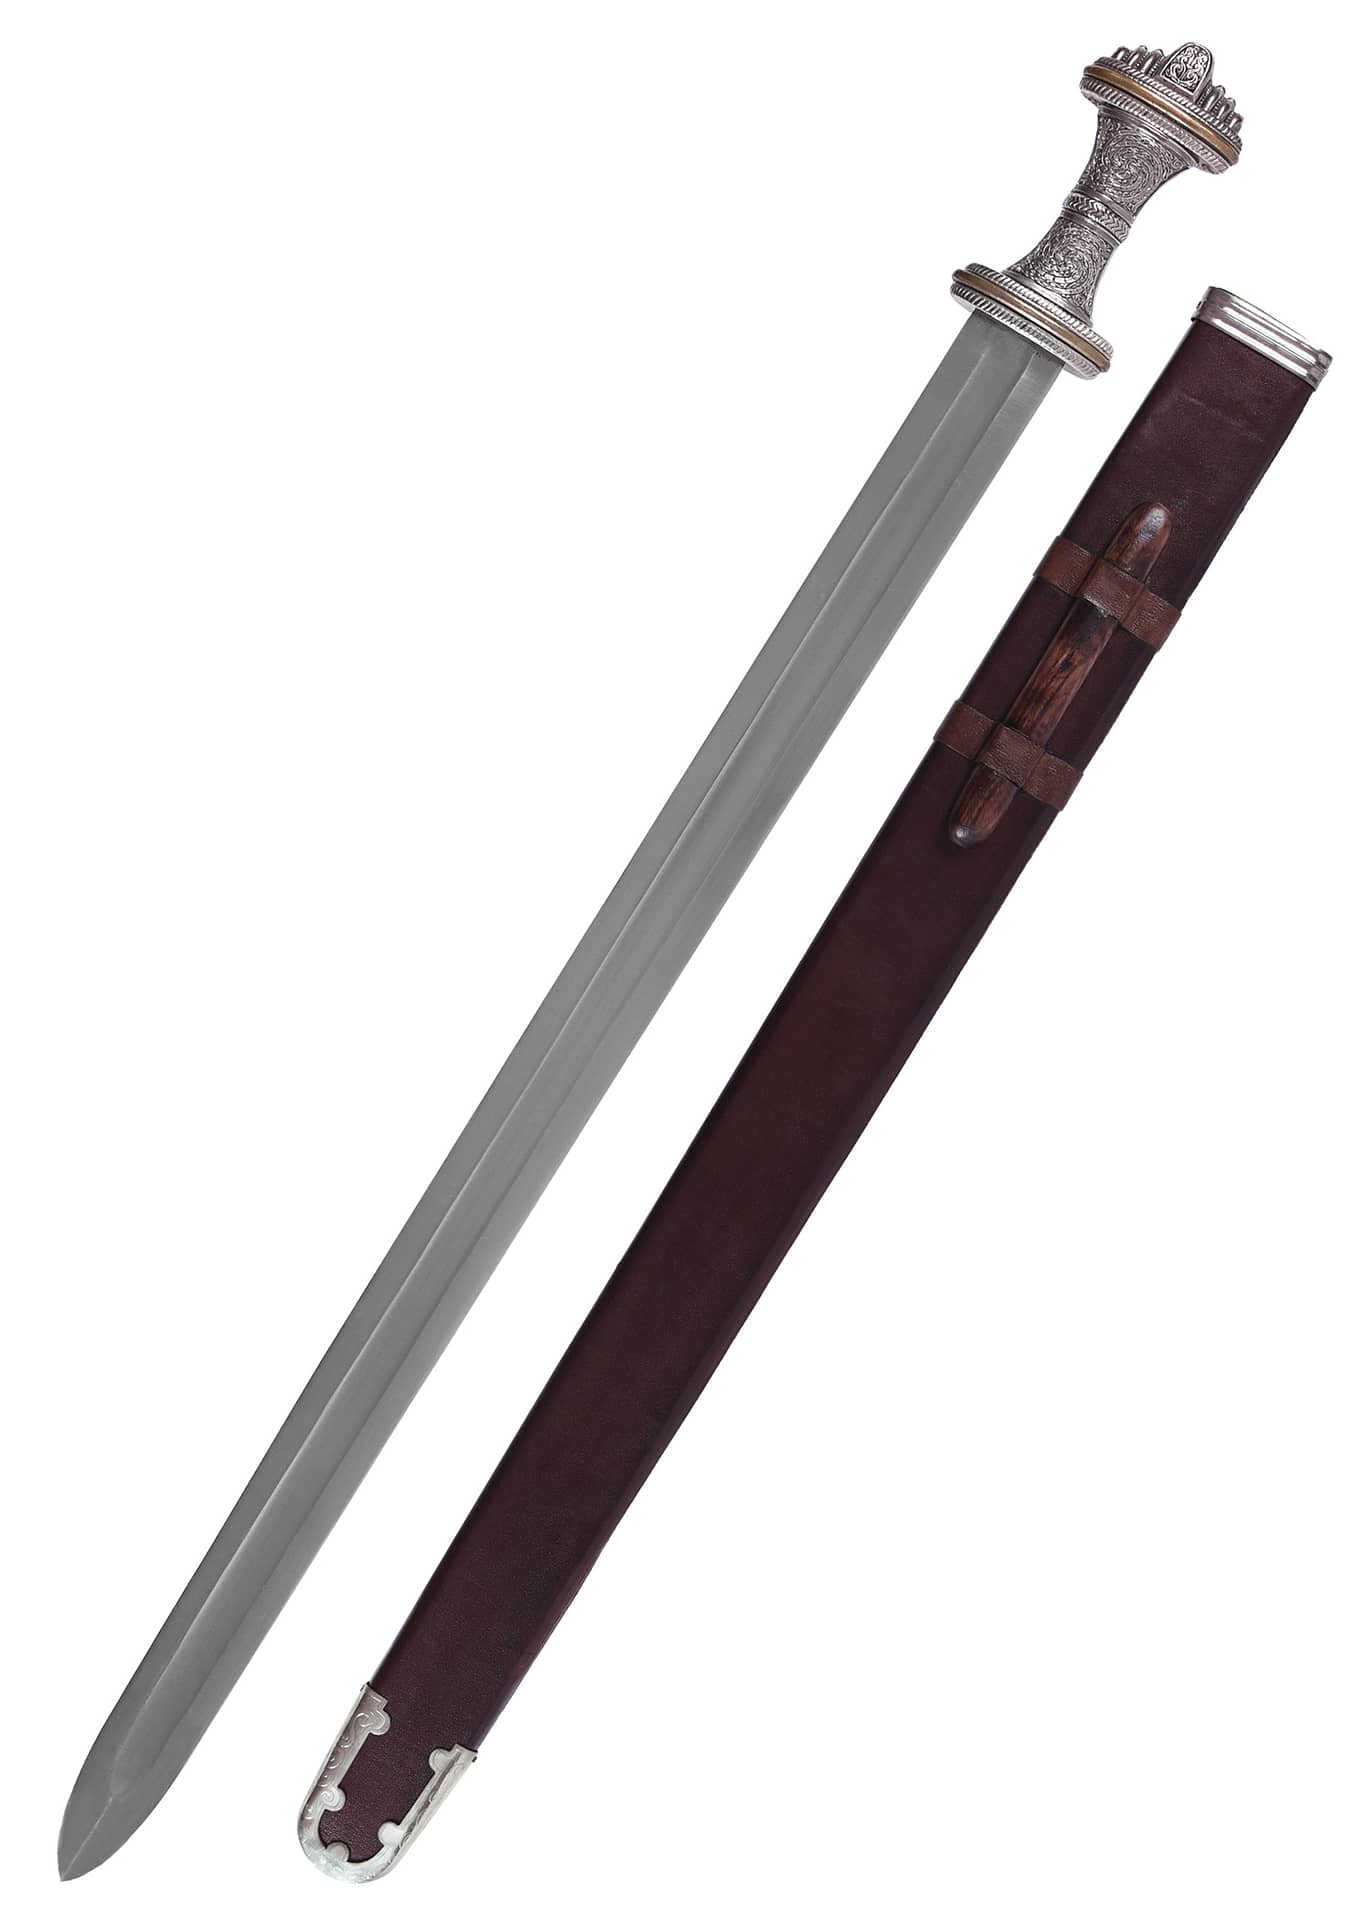 Espada anglosajona Fetter Lane, siglo VIII 0116041300 - Espadas y Más